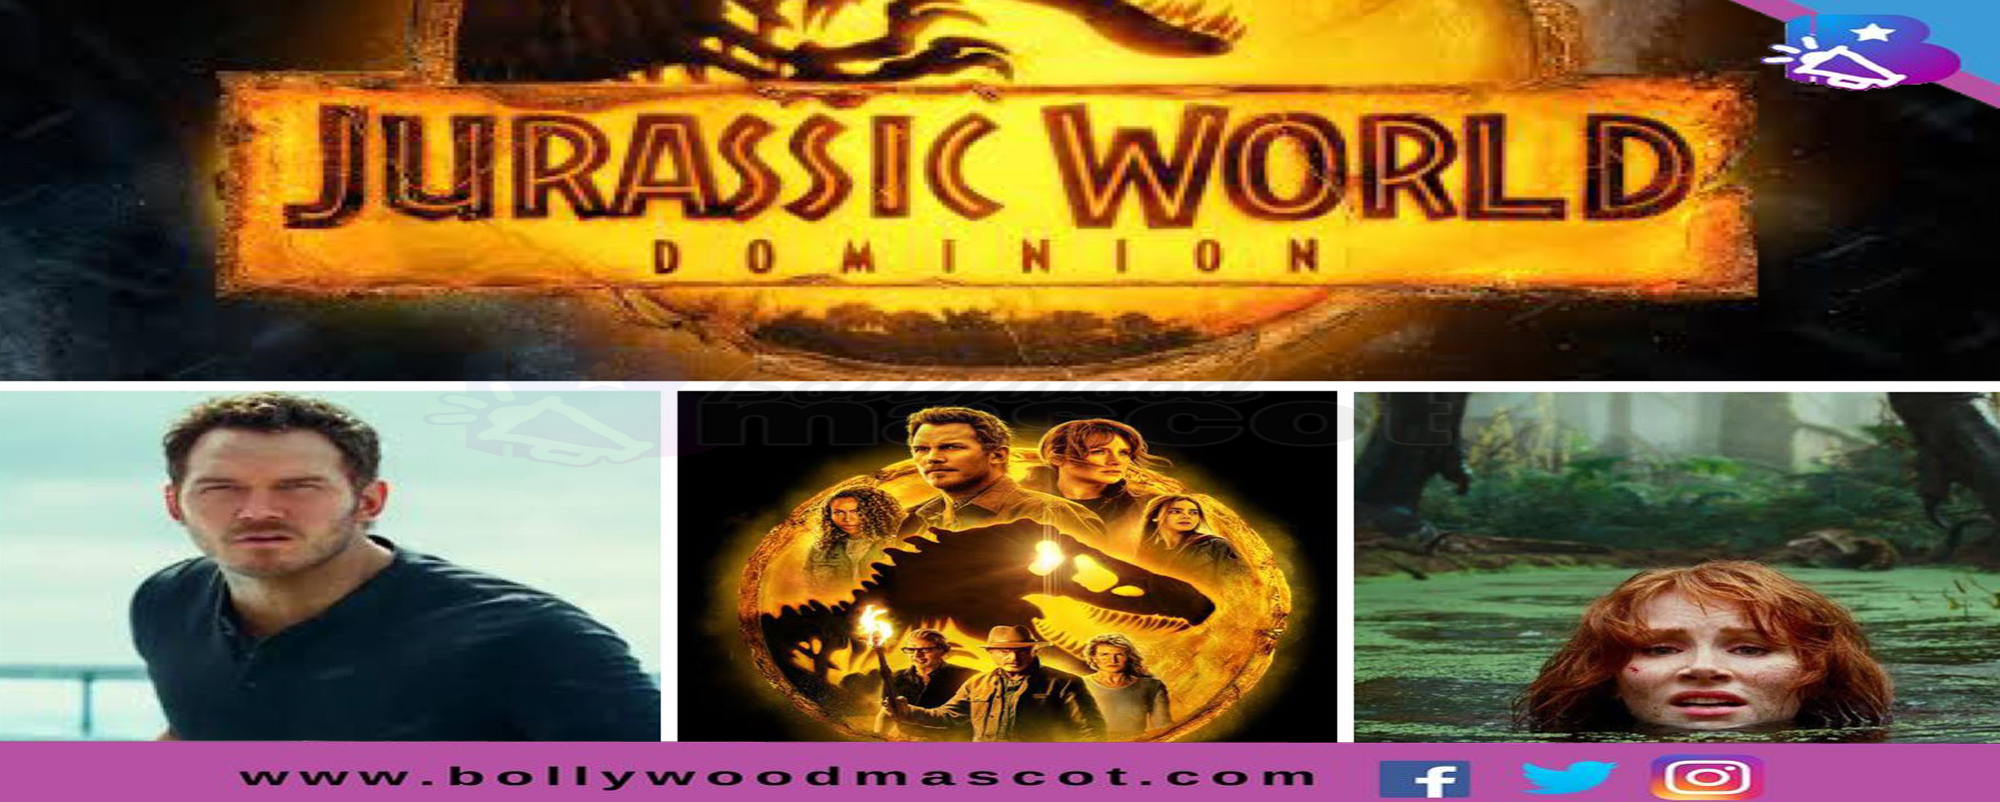 Jurassic World Dominion Box Office Collection